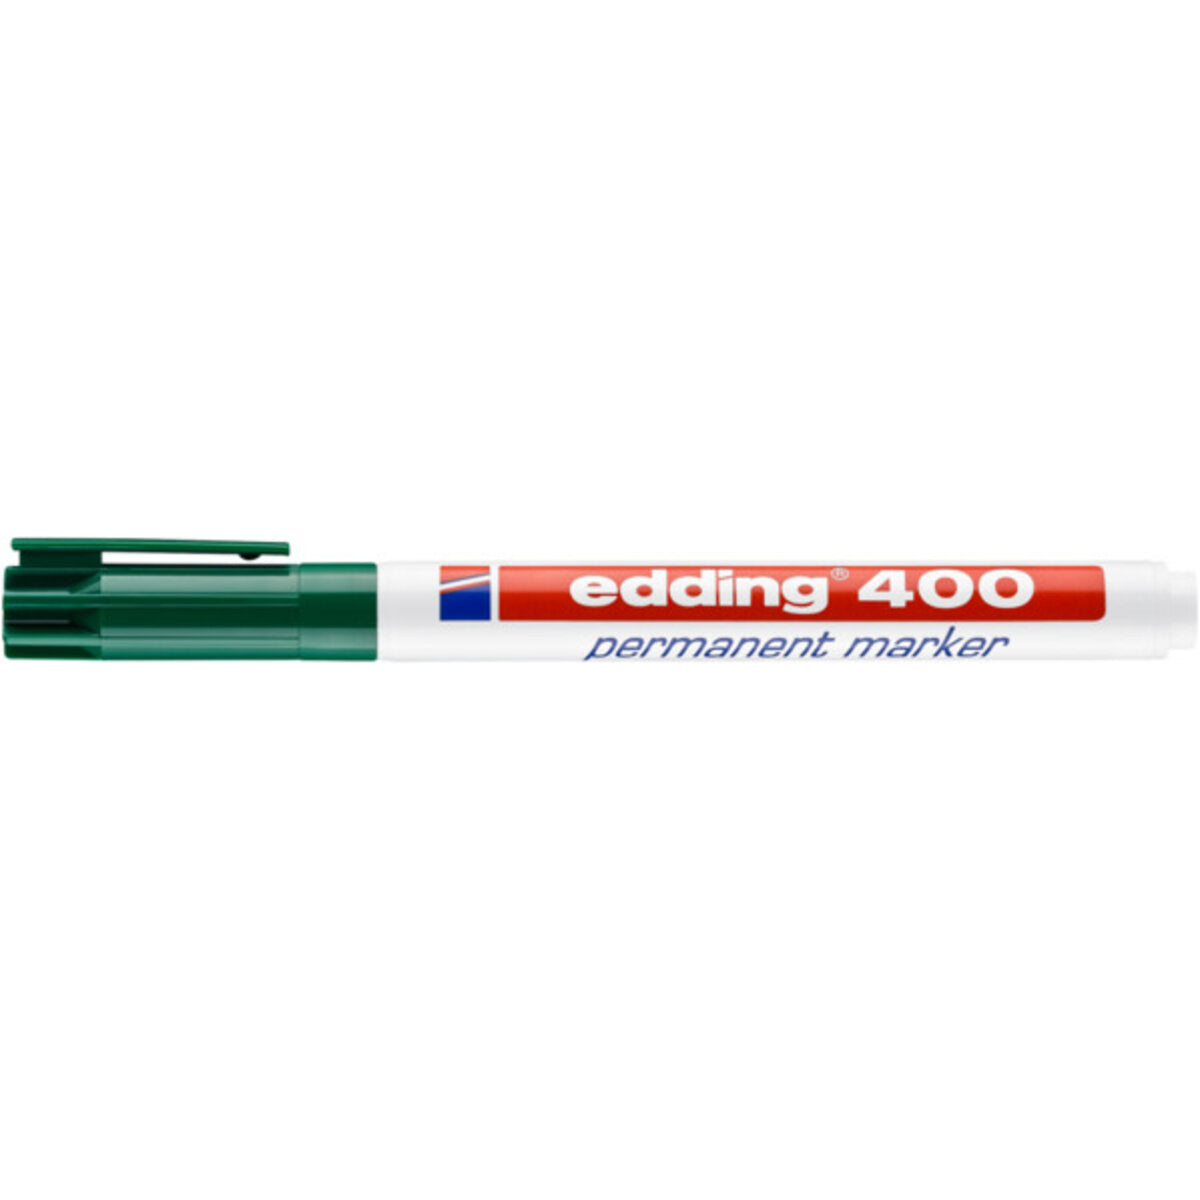 edding 400 Permanentmarker, 1mm, grün